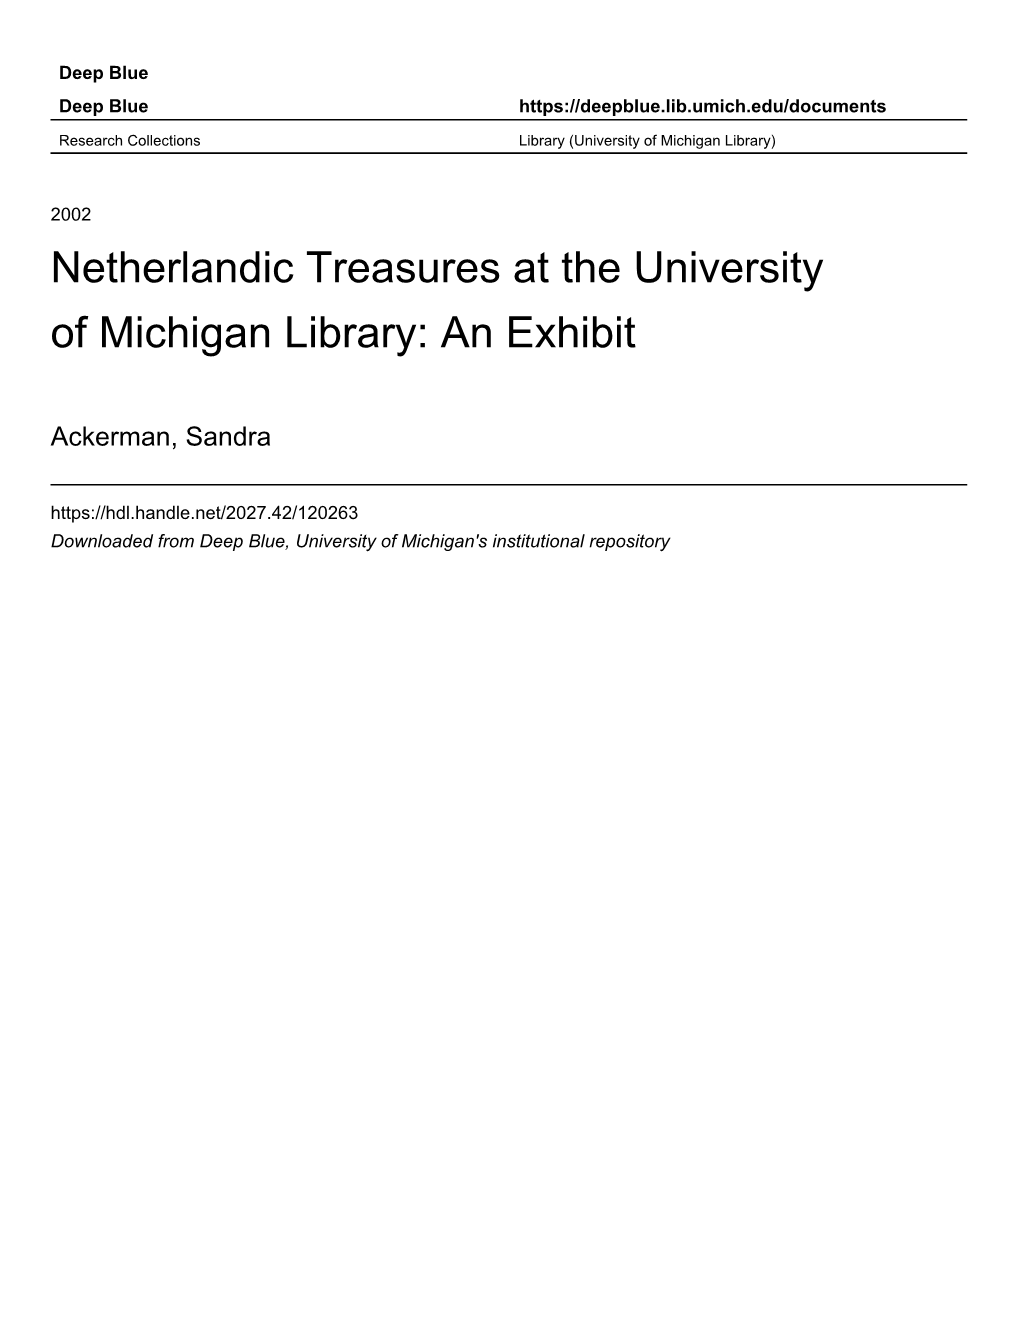 Netherlandic Treasures at the University of Michigan Library: an Exhibit